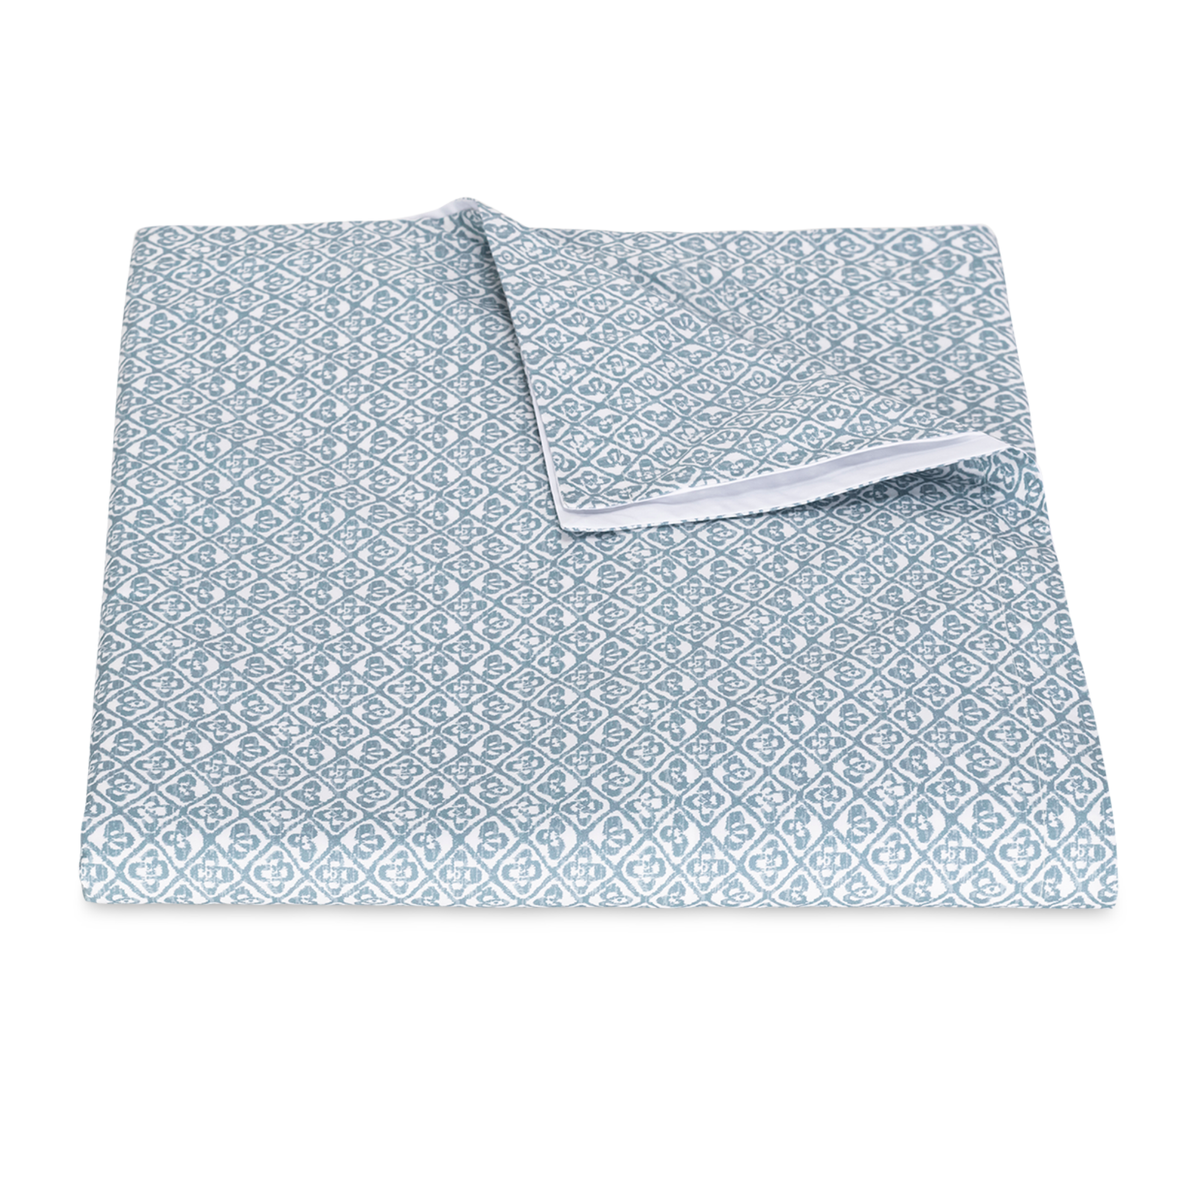 Folded Duvet Cover of Matouk Schumacher Catarina Bedding in Hazy Blue Color